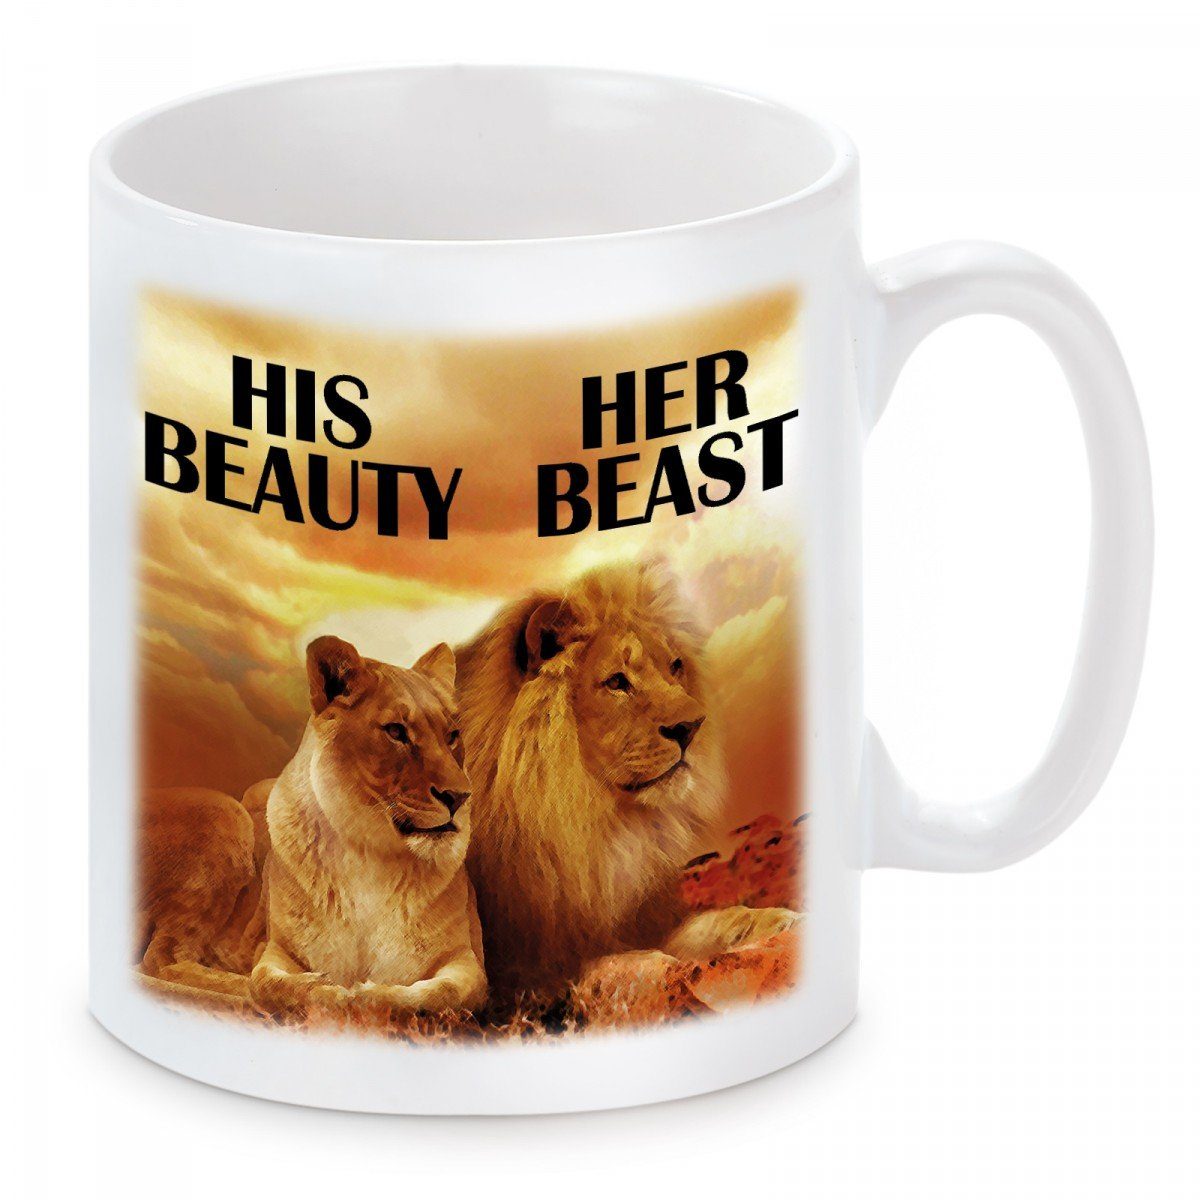 Herzbotschaft Tasse Kaffeebecher mit Motiv His Beauty Her Beast, Keramik, Kaffeetasse spülmaschinenfest und mikrowellengeeignet